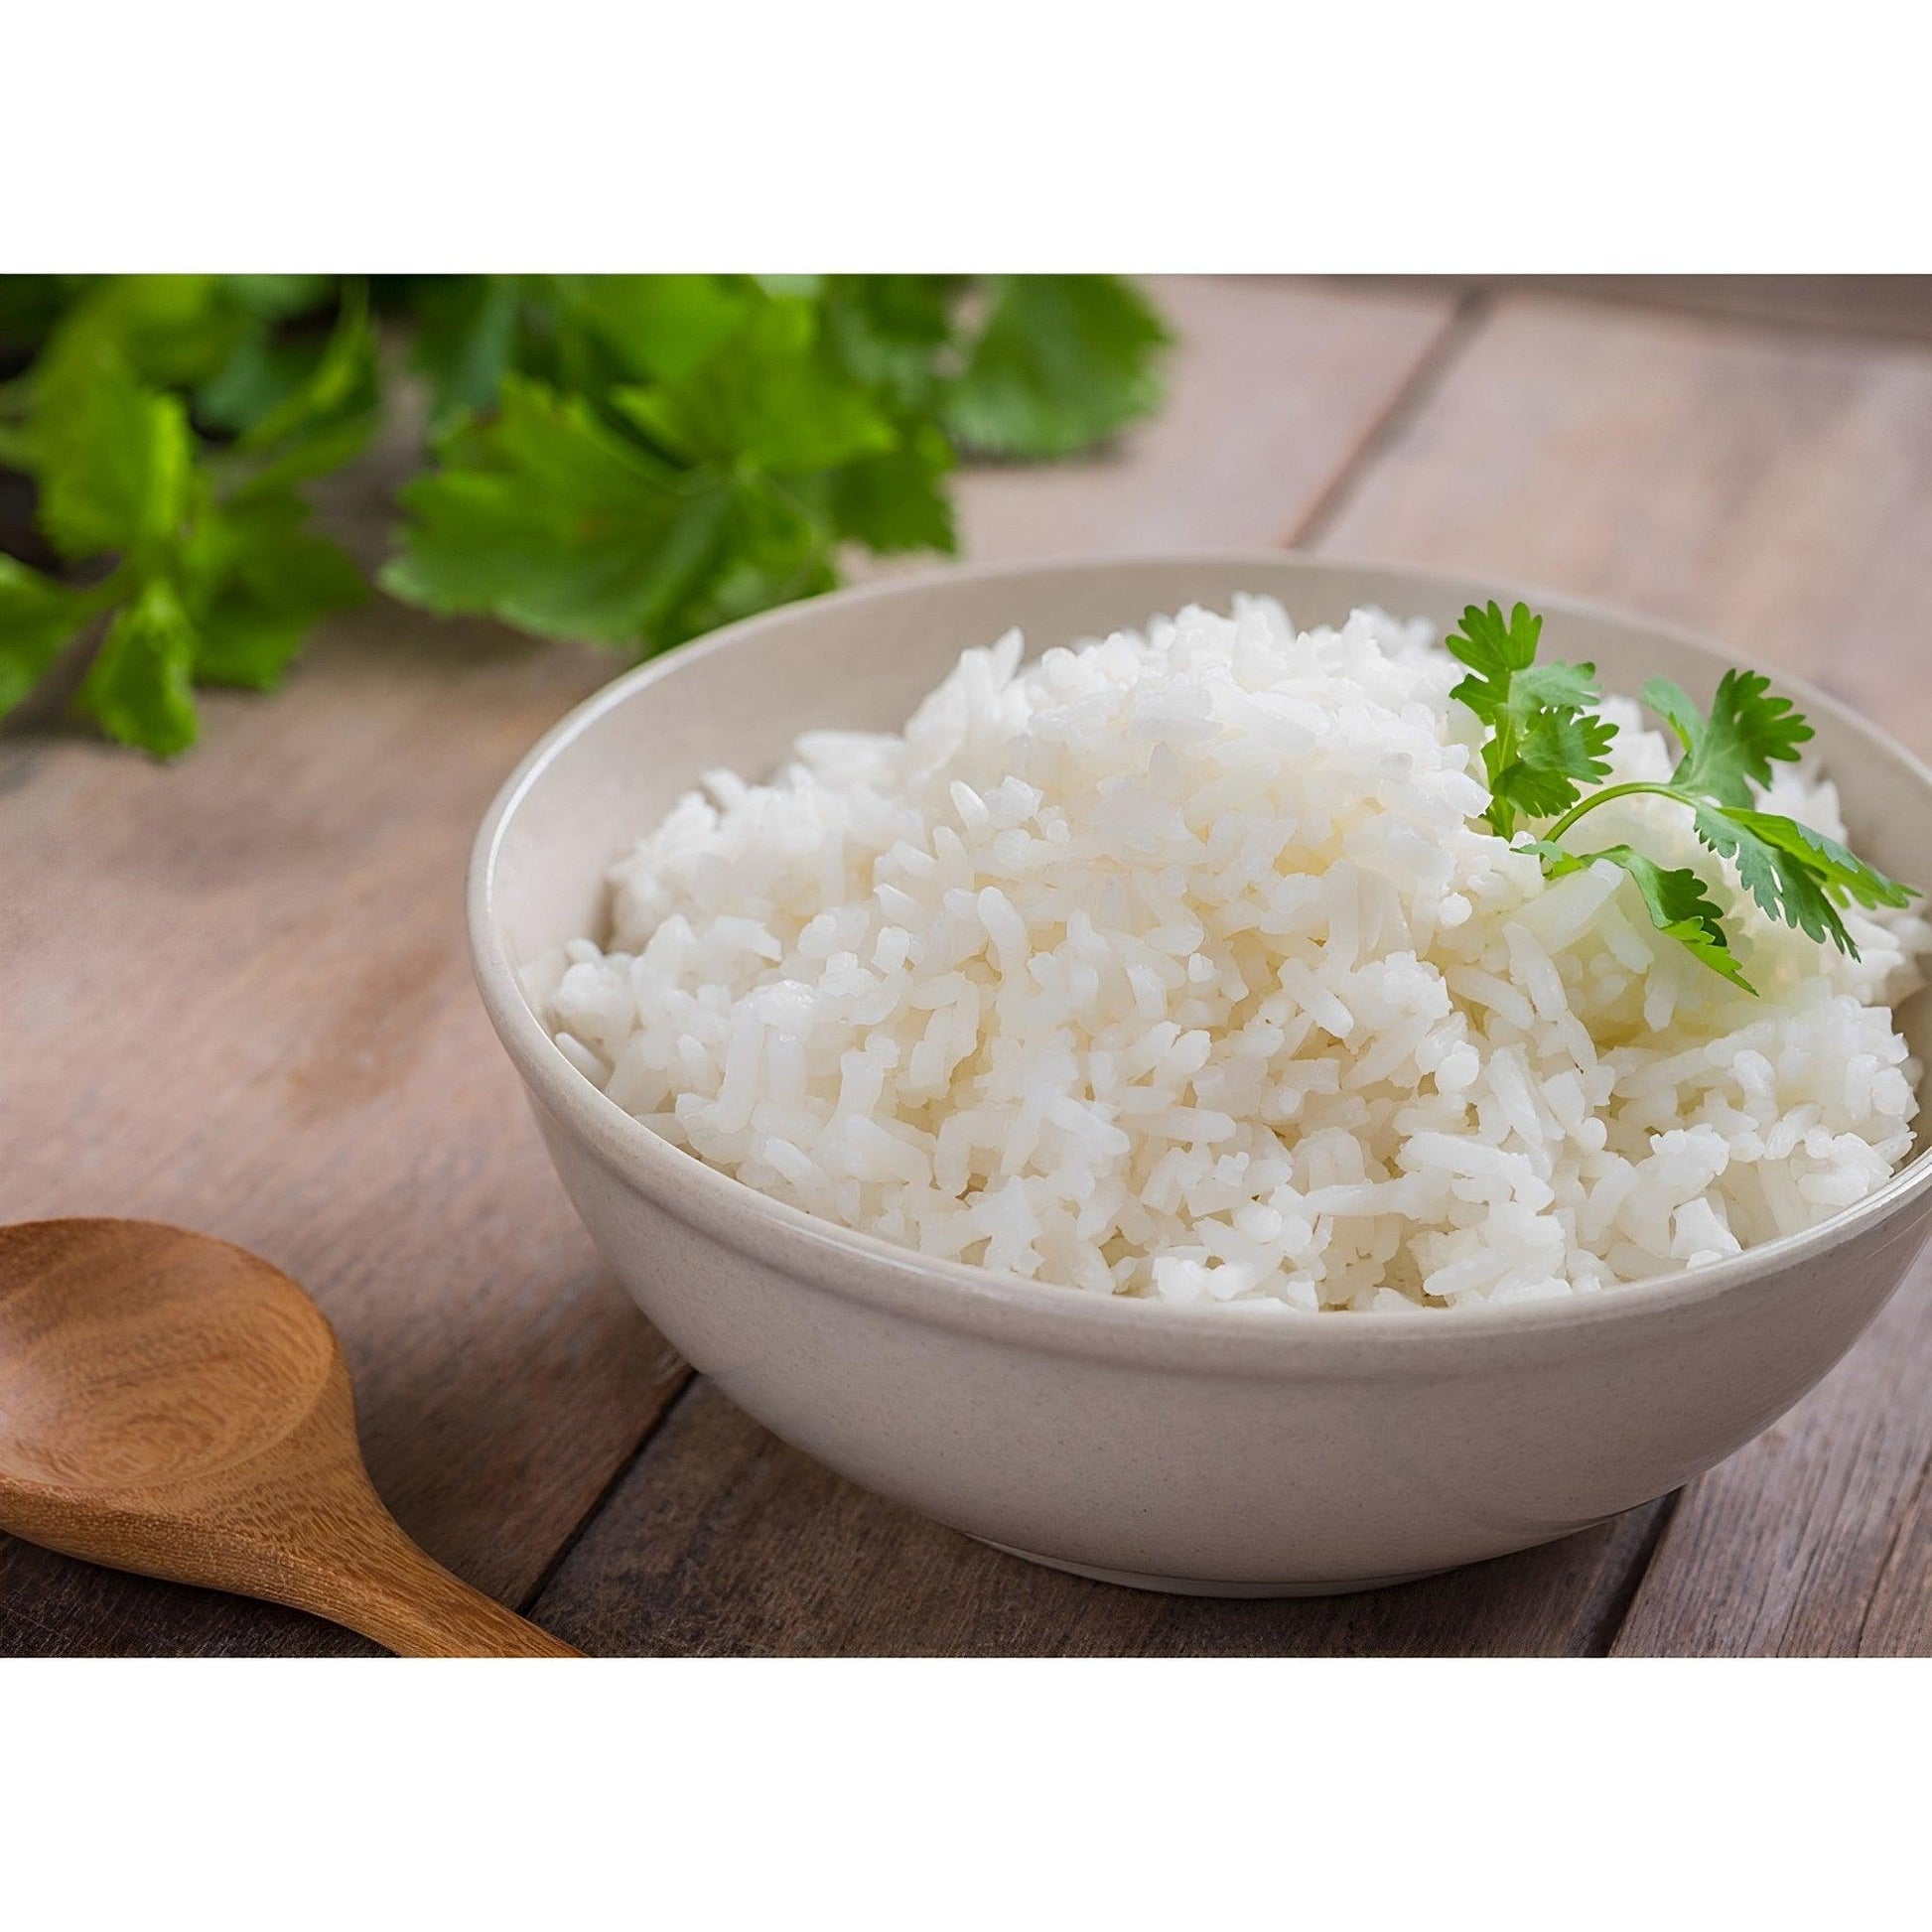 Combrasil White Rice 35.27 oz. (Pack of 2) - Brazilian Shop